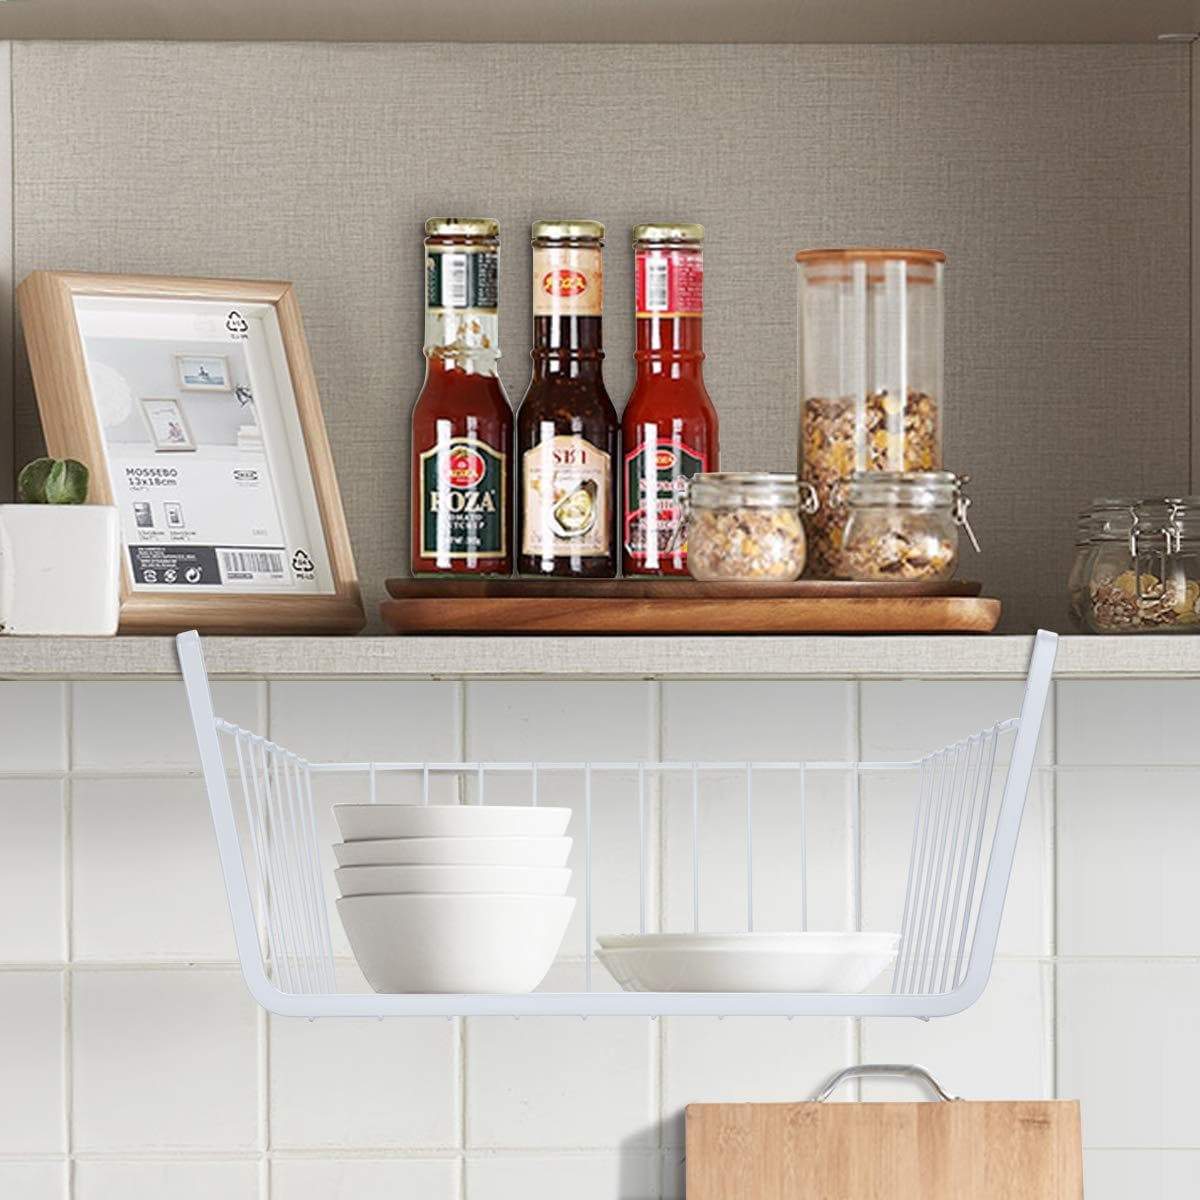 Discover the homeideas 4 pack under shelf basket white wire rack slides under shelves storage basket for kitchen pantry cabinet